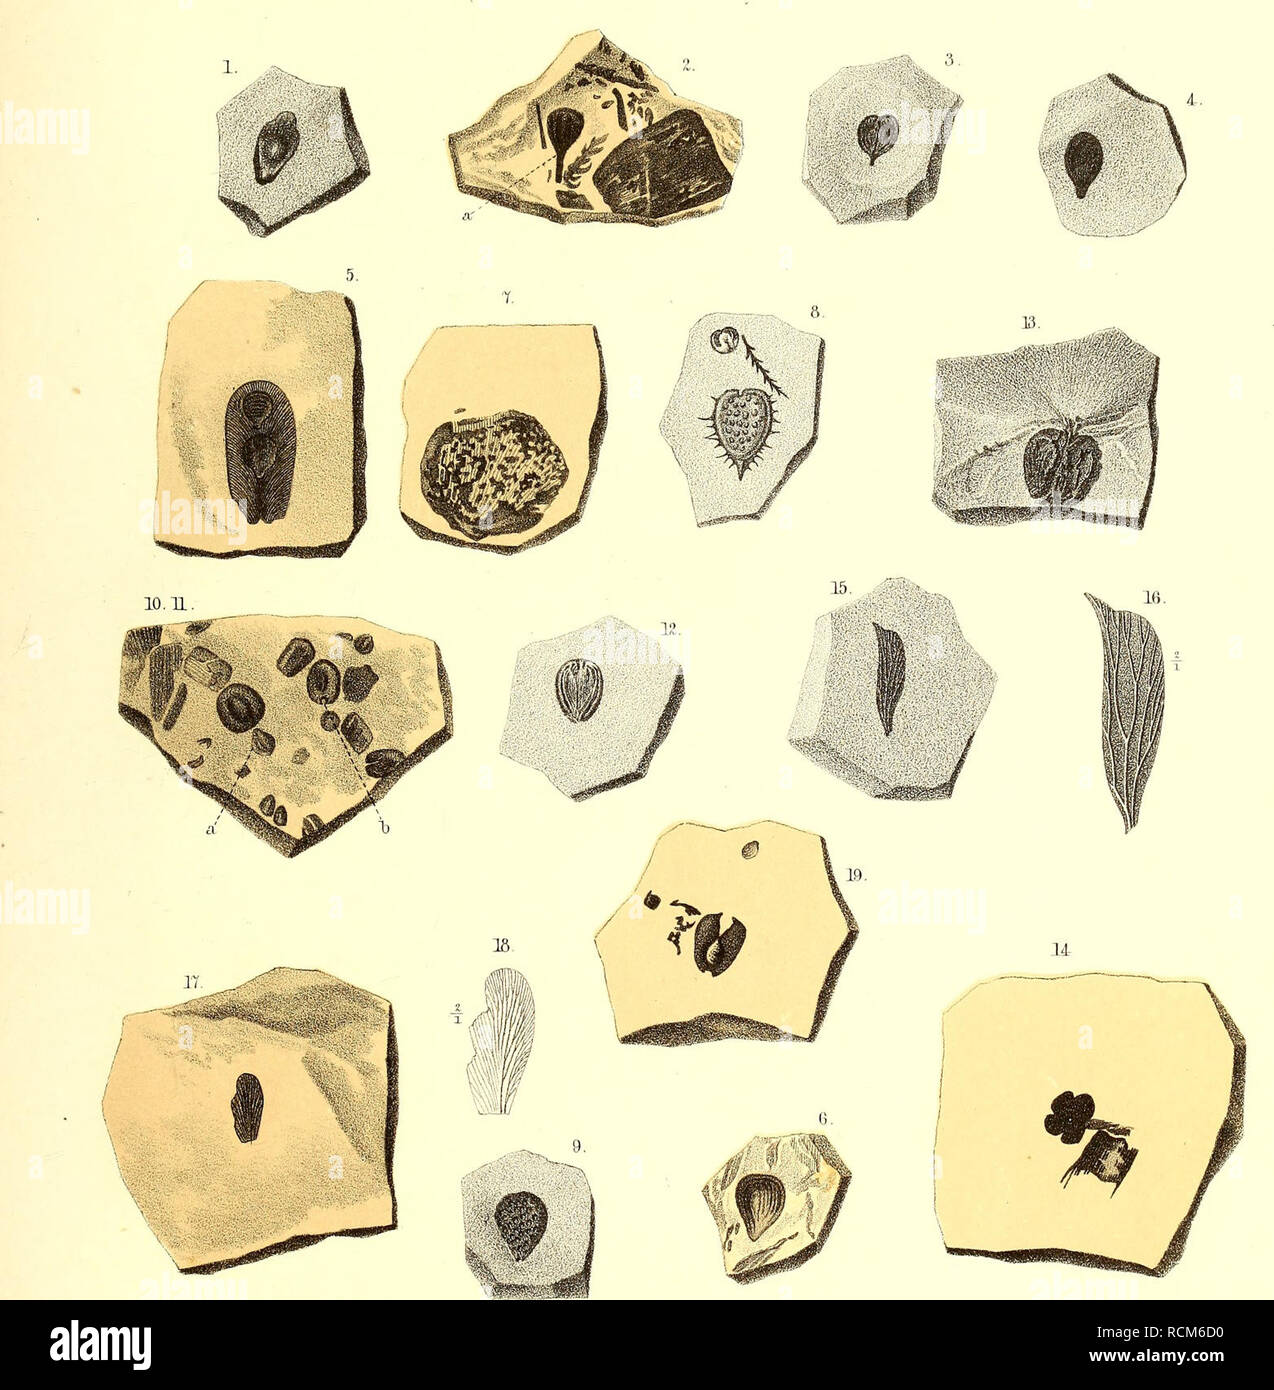 . Die fossile Flora der Permischen Formation. Paleobotany. Palaeontogr. Bd. XII. Taf. XXVIII.. 1. Cardiocarpus umbonatus Göpp. — 2. C. attcnuatus Göpp. — 3. C. pedicellatus Göpp. — 4. C. apiculatus Göpp. Berg. — 5. Ii. C. subtriangulus Göpp. — 7. Cyclocarpus vanniformis Göpp. — 8. 9. Acantliocarpus xanthioides Göpp, 10. 11. Samaropsis ulmiformis Göpp. — 12. 13. Didymotheca cordata Göpp. — 15 — 19. Flügel von Insekten, ähnlich Rhynchotis.. Please note that these images are extracted from scanned page images that may have been digitally enhanced for readability - coloration and appearance of the Stock Photo